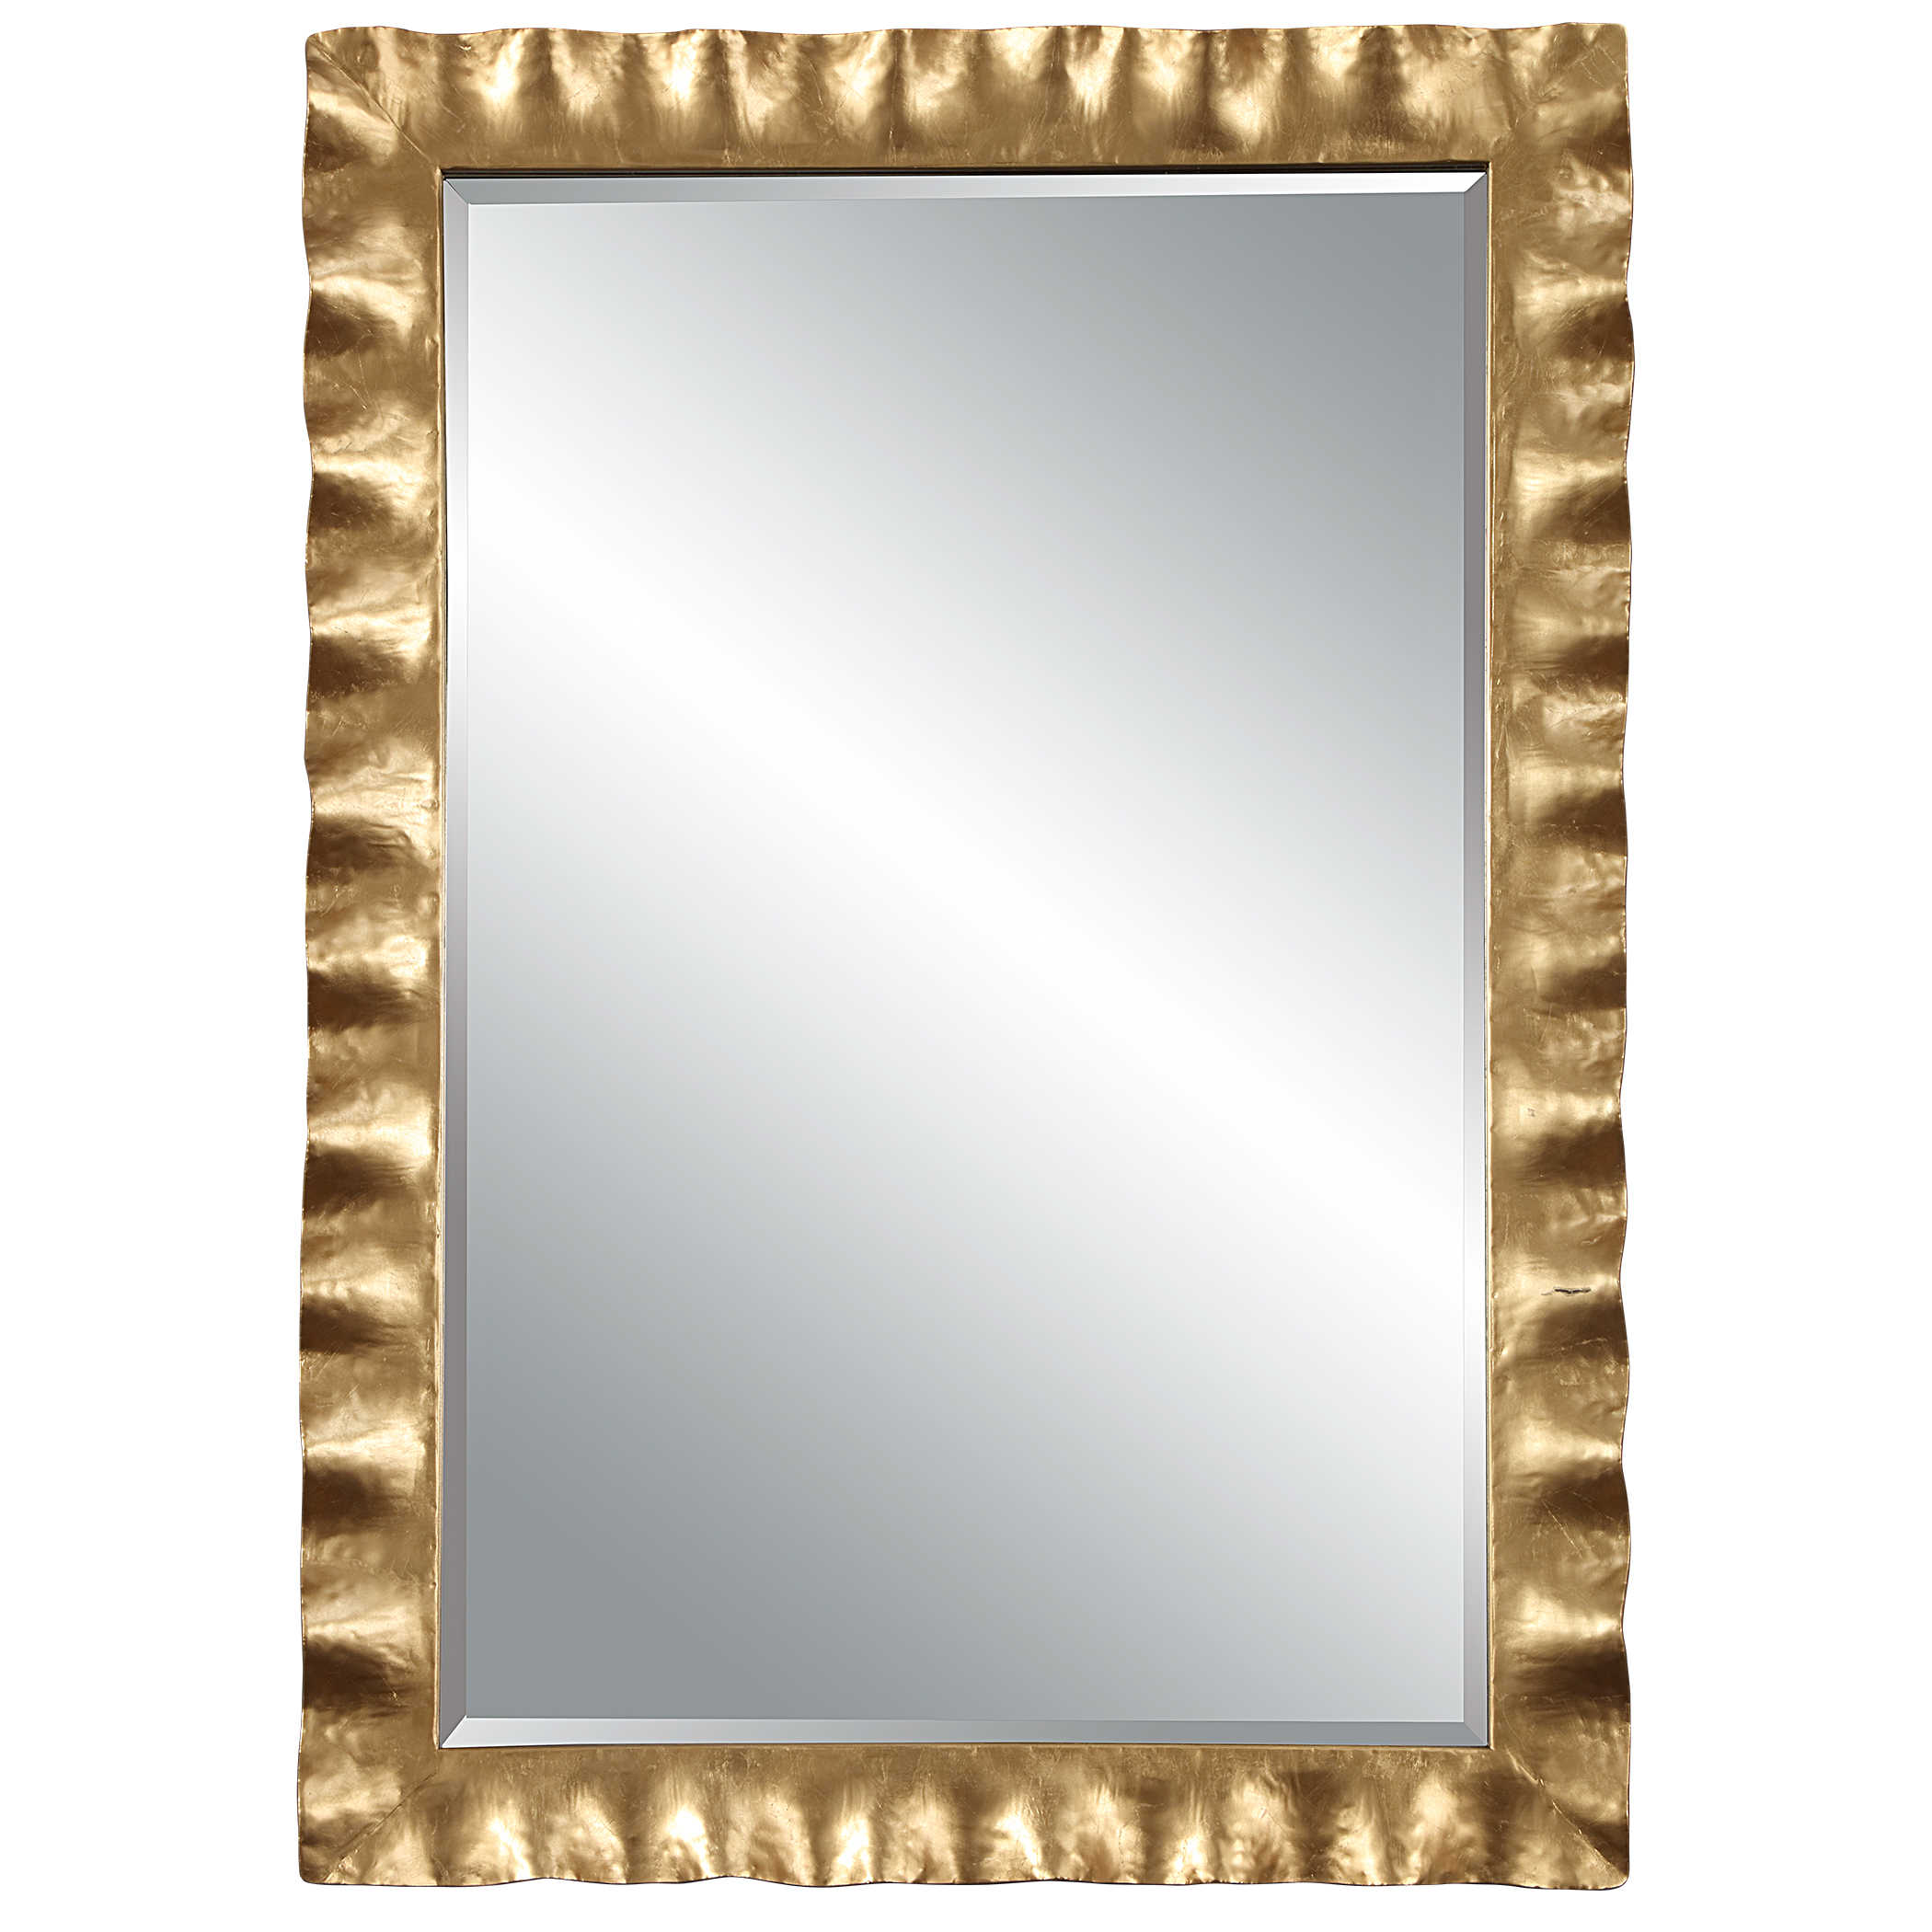 Uttermost Haya Scalloped Gold Mirror Scalloped Gold Mirror Uttermost IRON, MDF, GLASS  